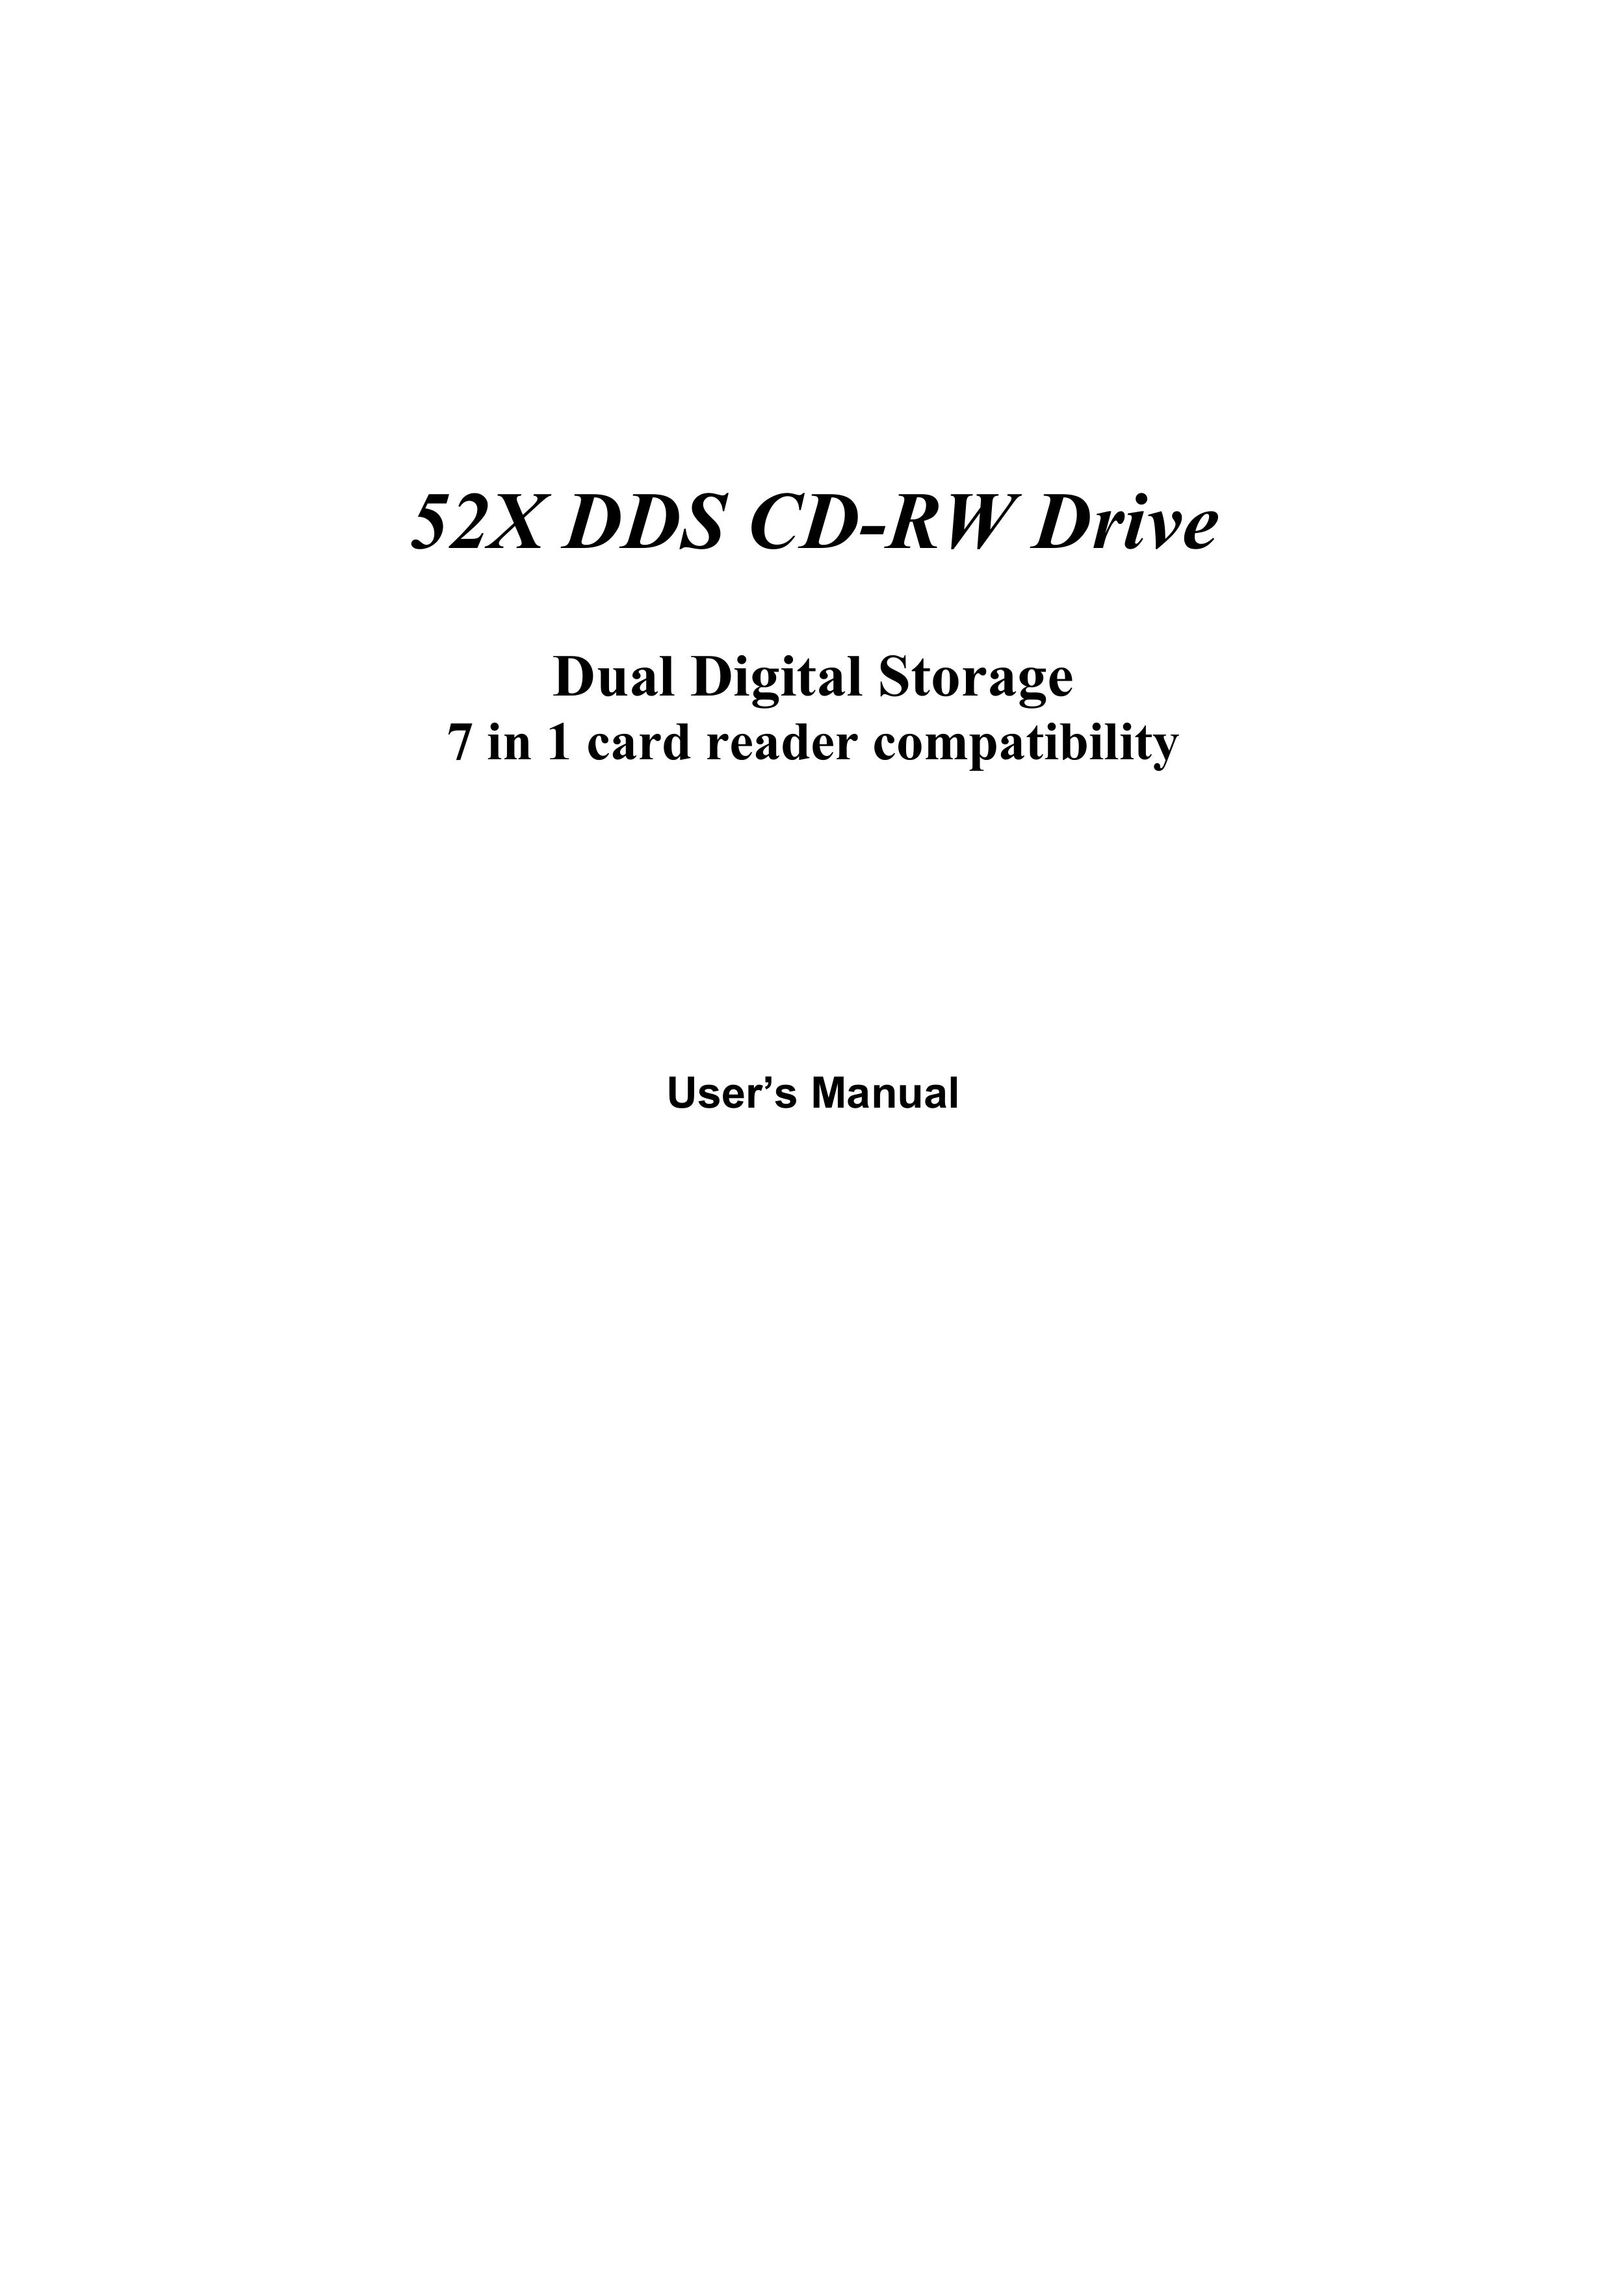 Emprex 52X DDS Network Card User Manual